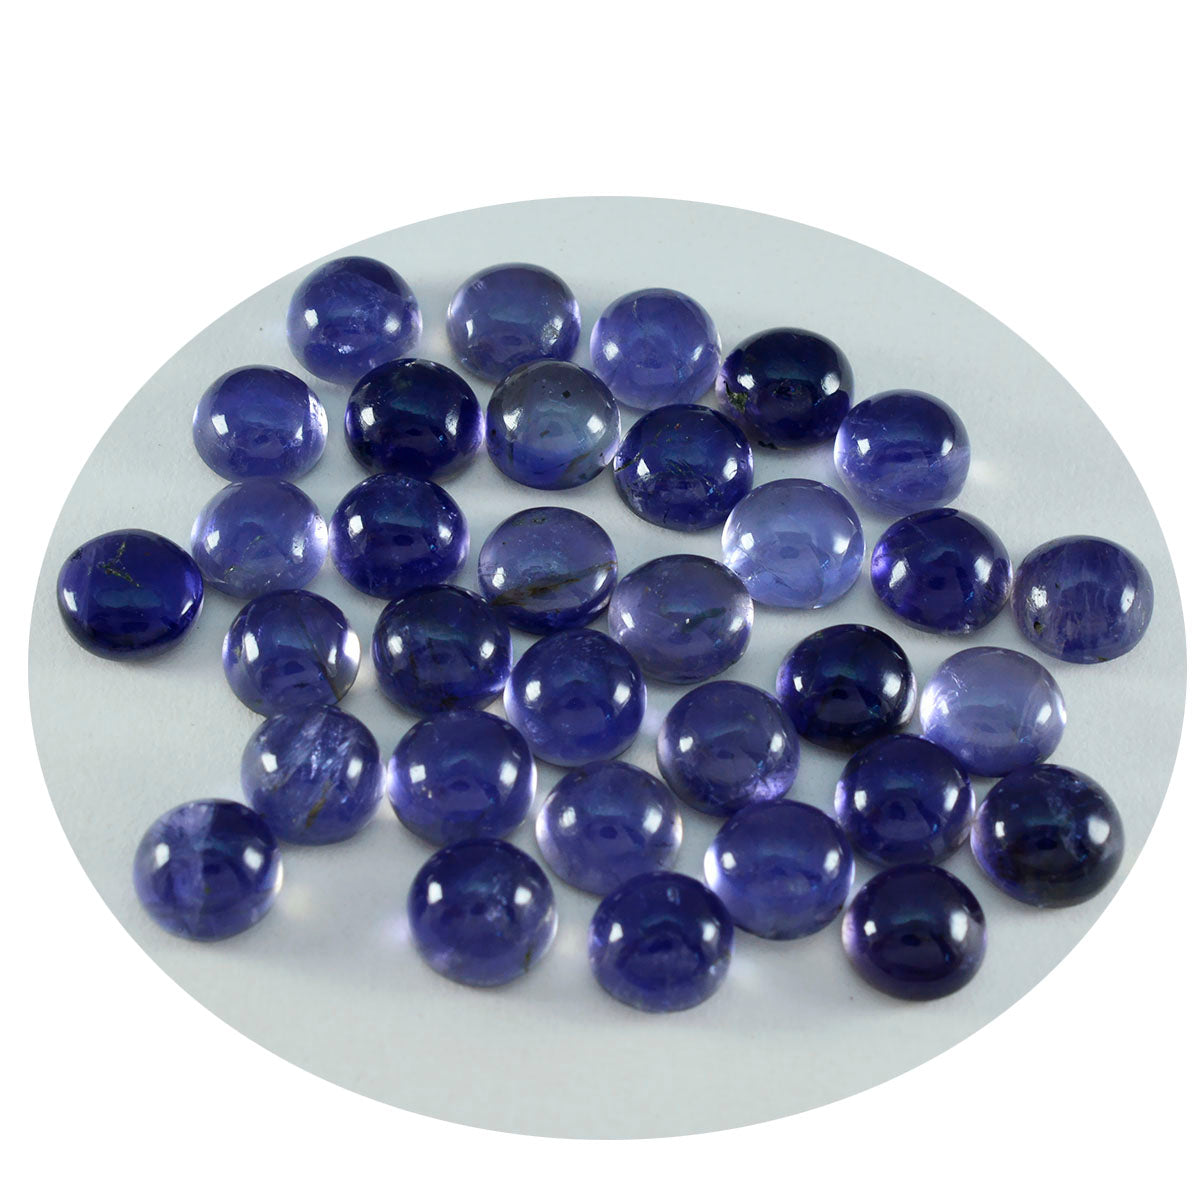 riyogems 1pc cabochon di iolite blu 7x7 mm forma rotonda gemma sfusa di qualità A+